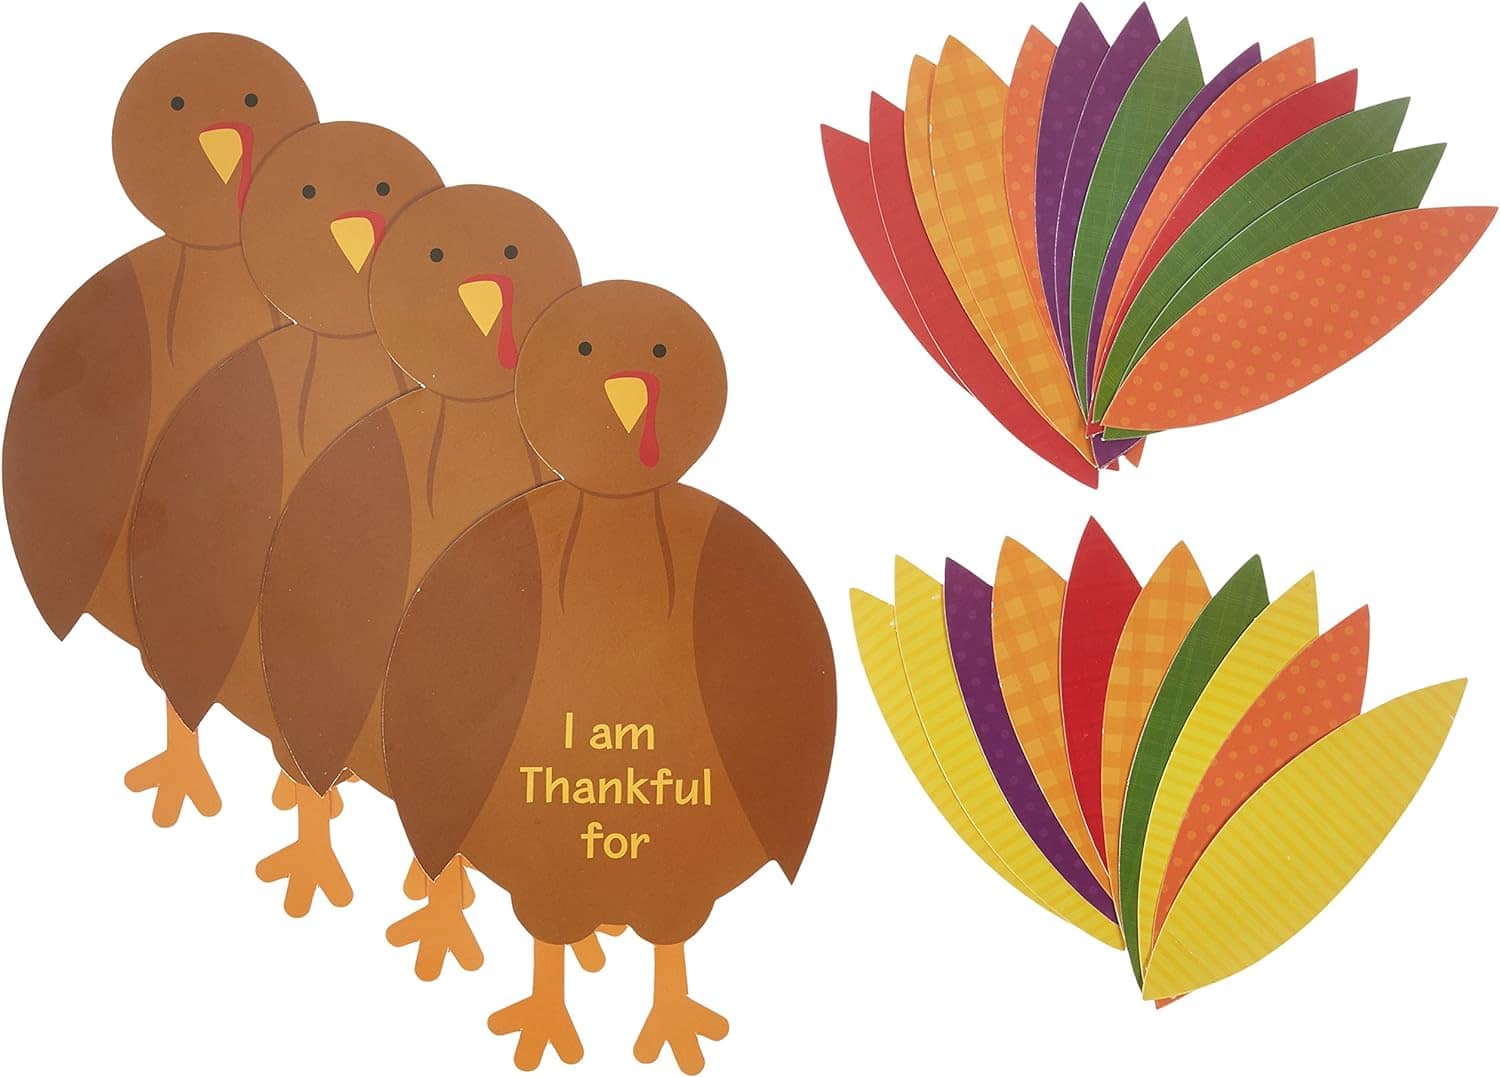 Thankful turkey activity for kids